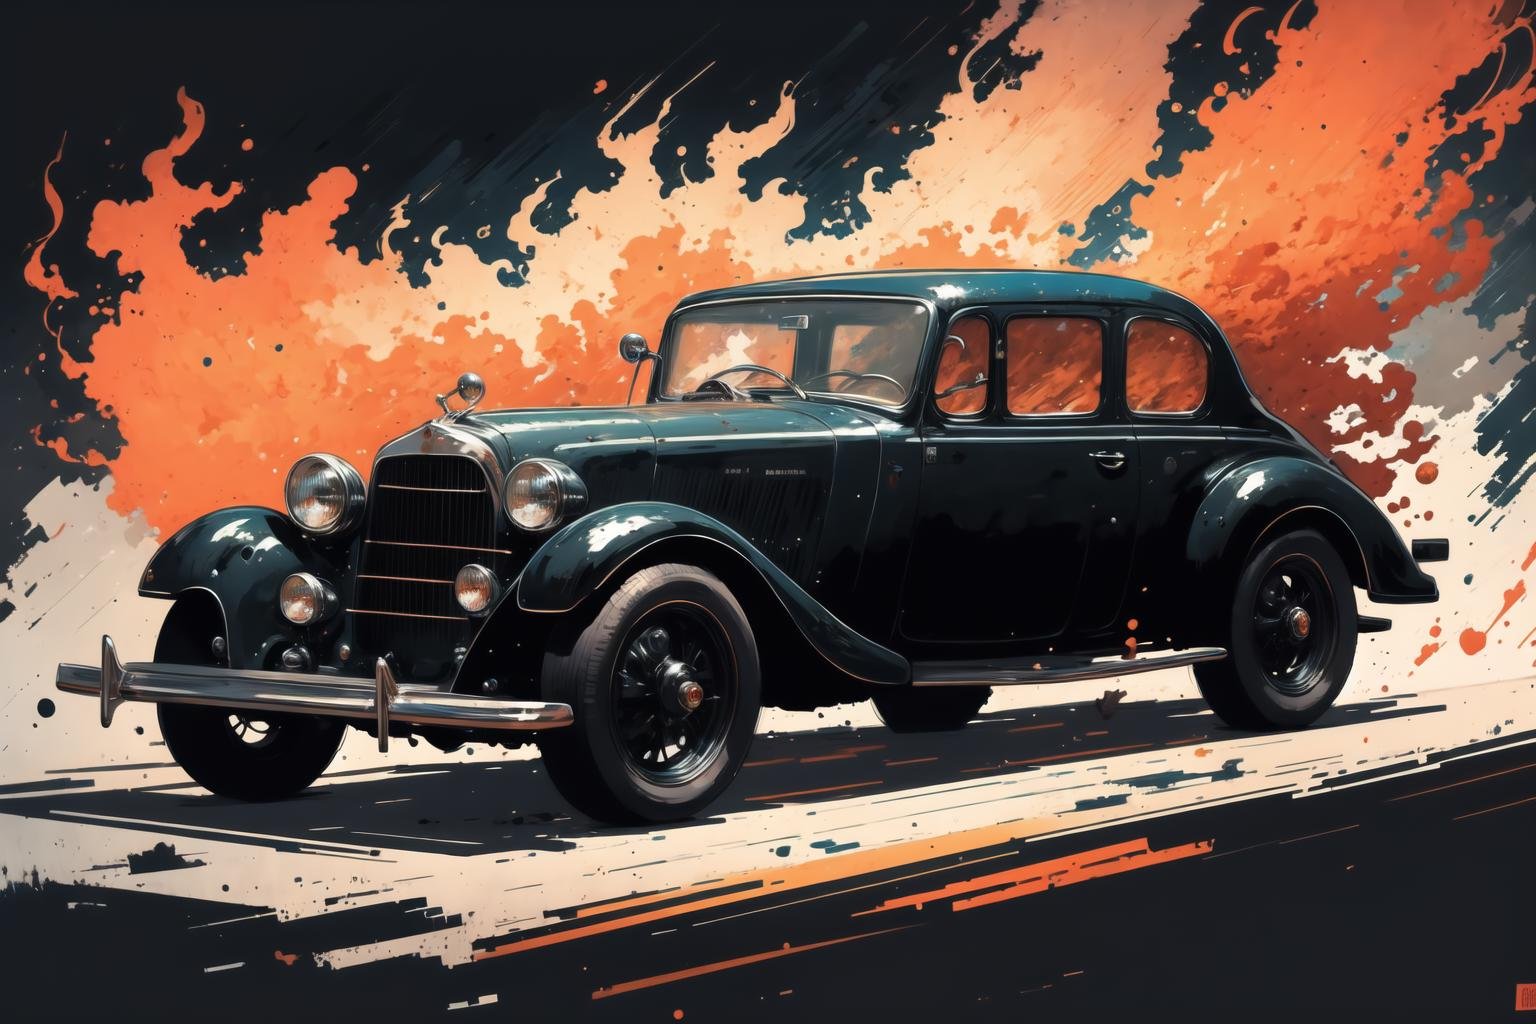 masterpiece, best quality, retro car, powerful, fire, splash art, (black background:1.4), lineart, sketch